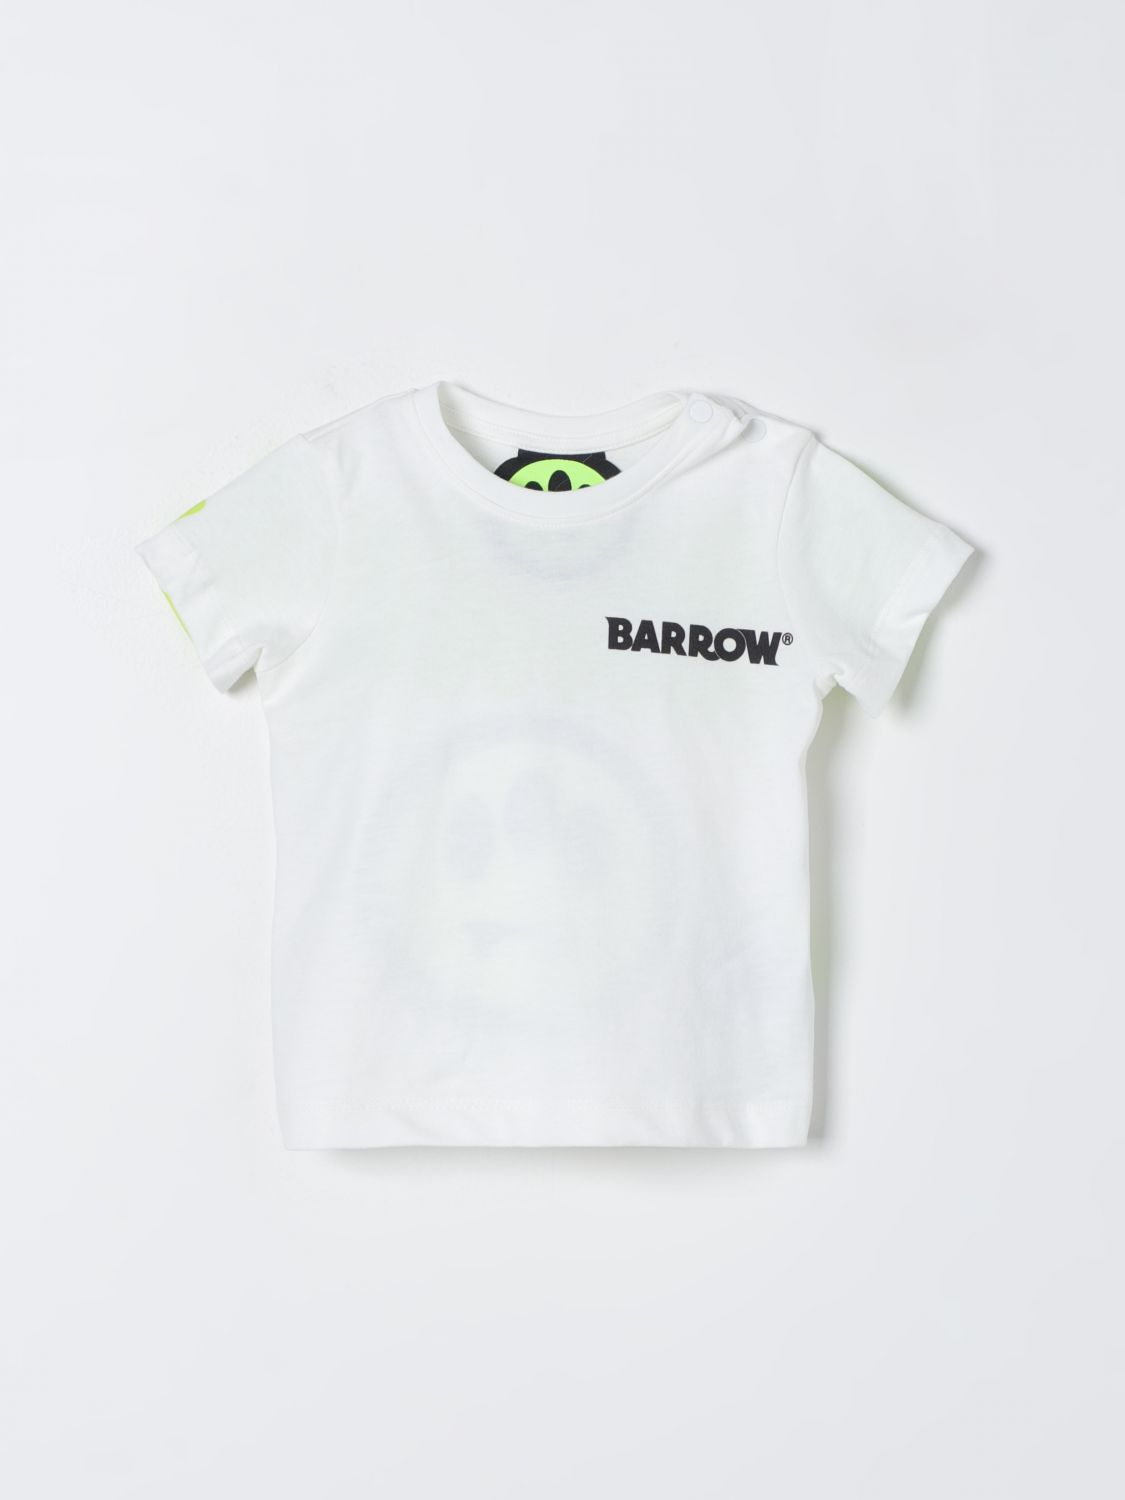 Barrow Babies' T-shirt  Kids Kids Color White